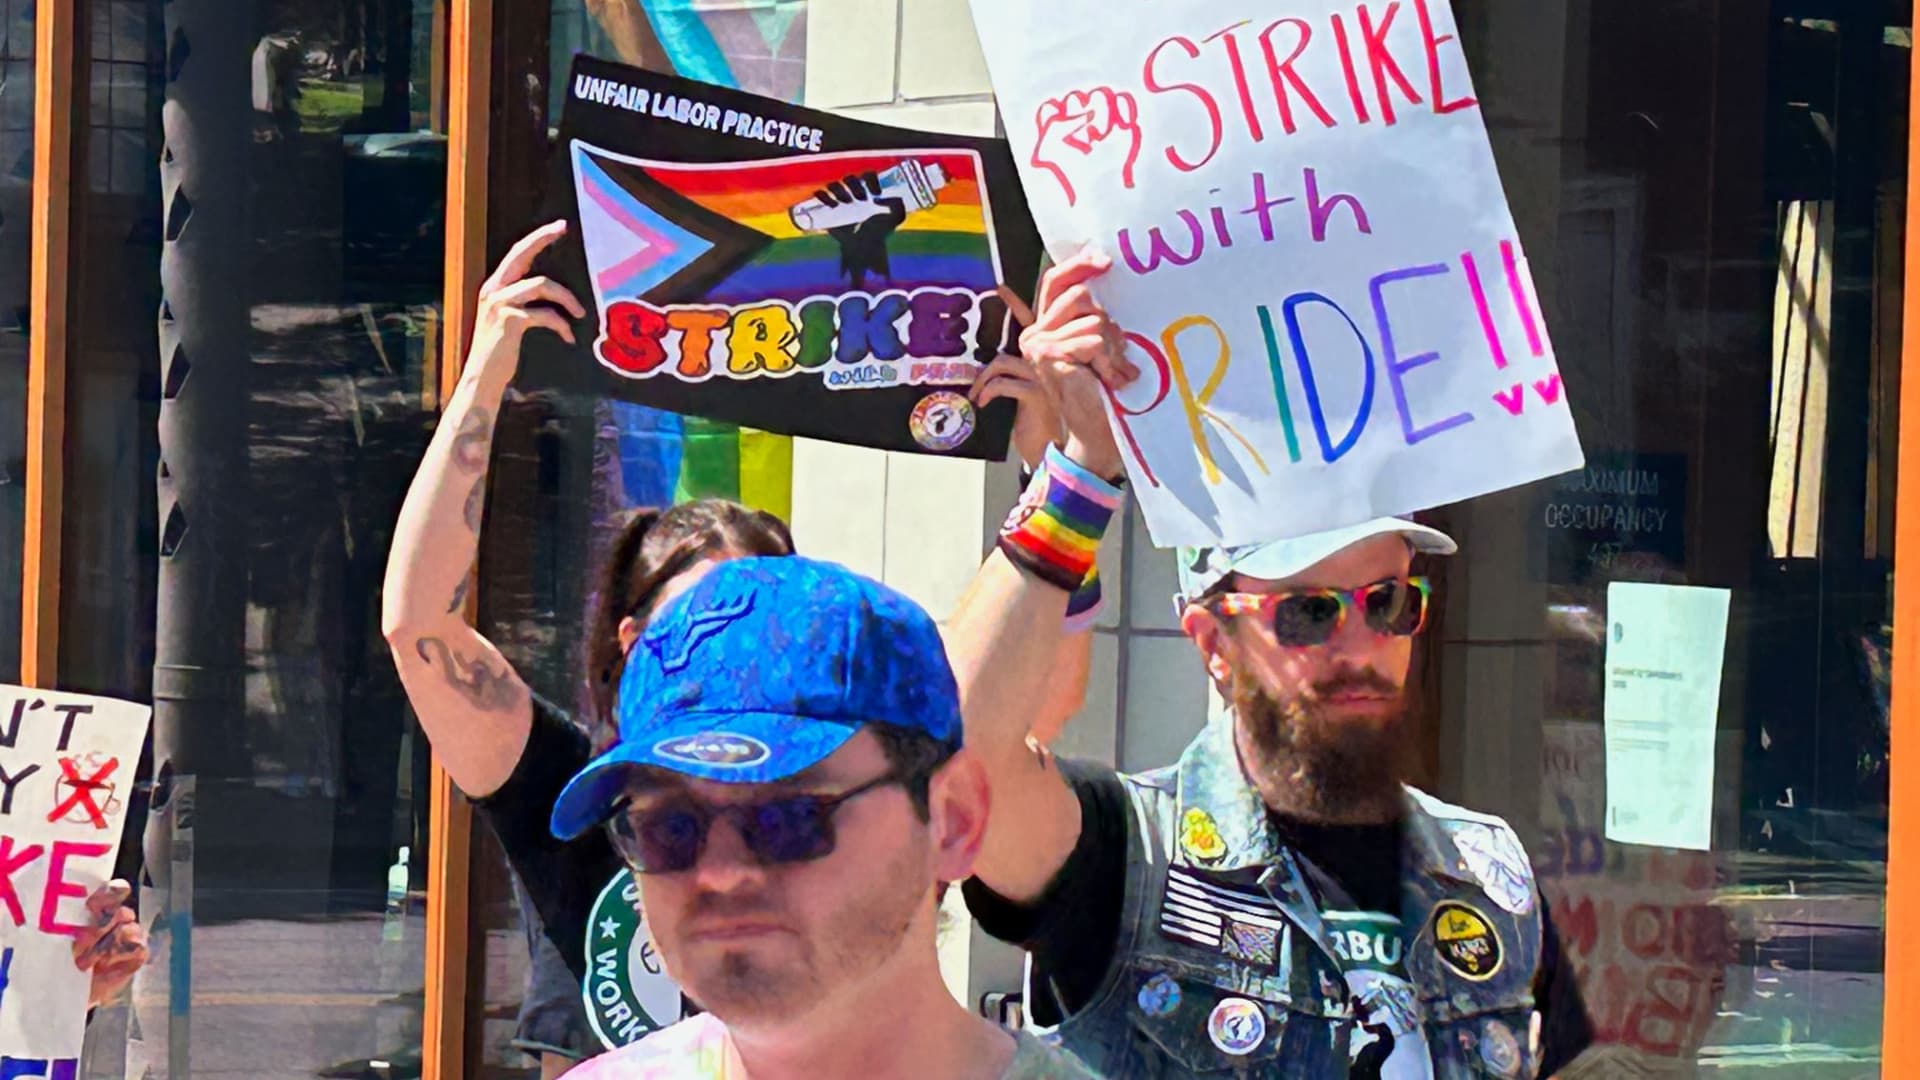 Starbucks files labor complaint against union over Pride decor allegations